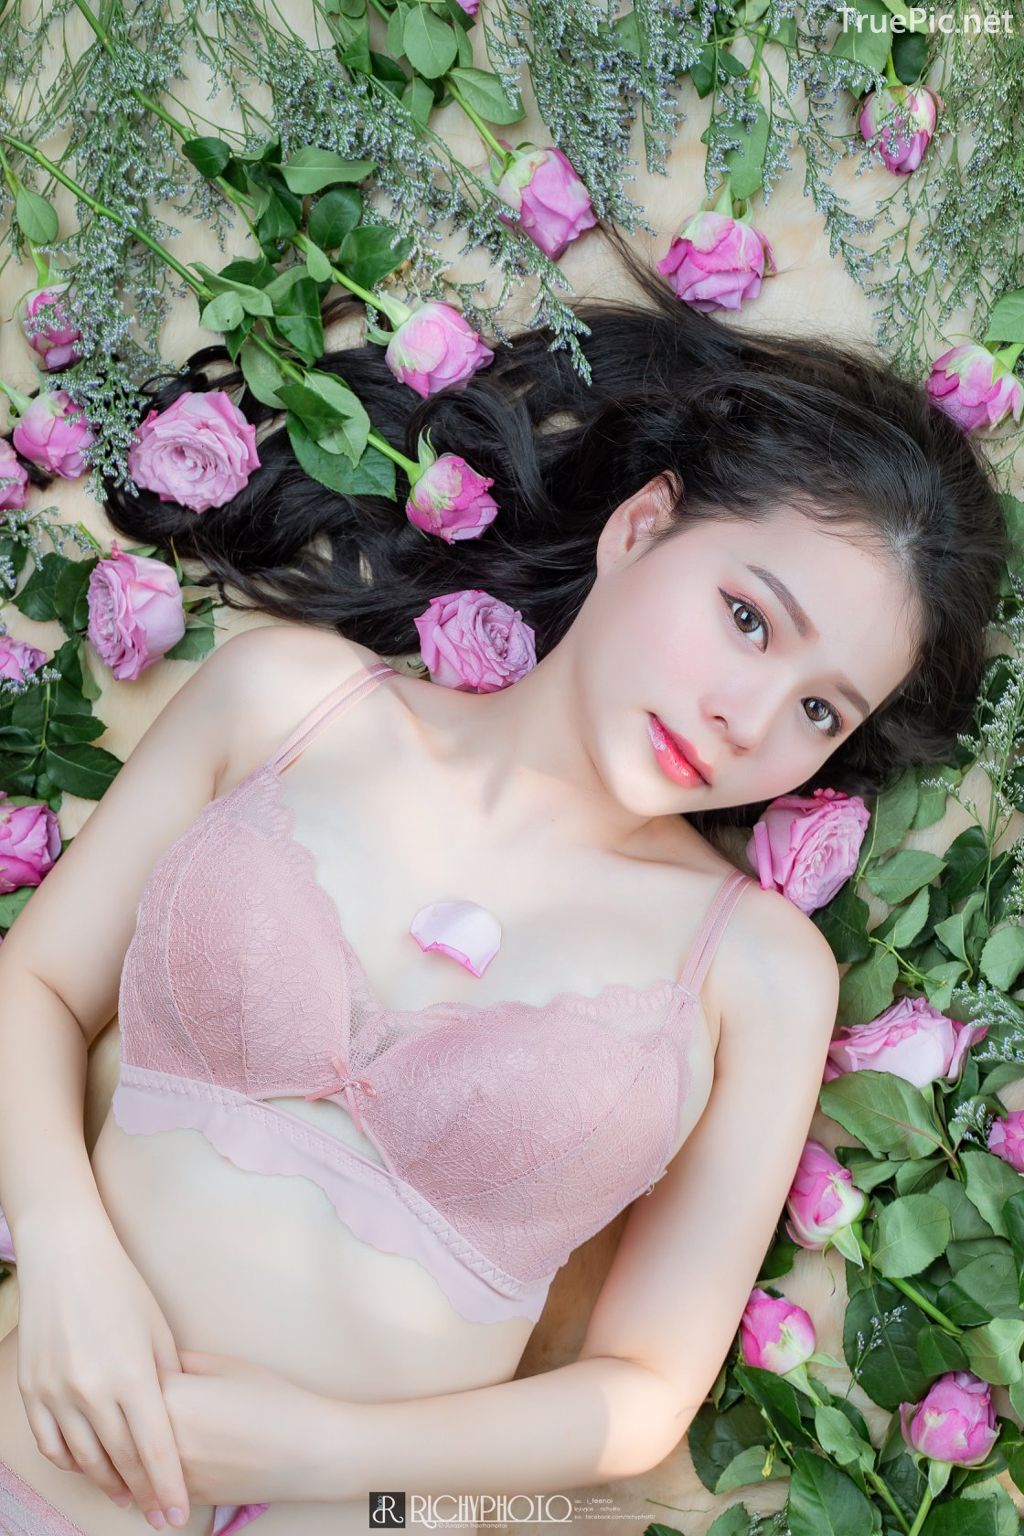 Image-Thailand-Cute-Model-Tuktick-Ponthip-Tantisuwanna-Girl-On-Flower-TruePic.net- Picture-36